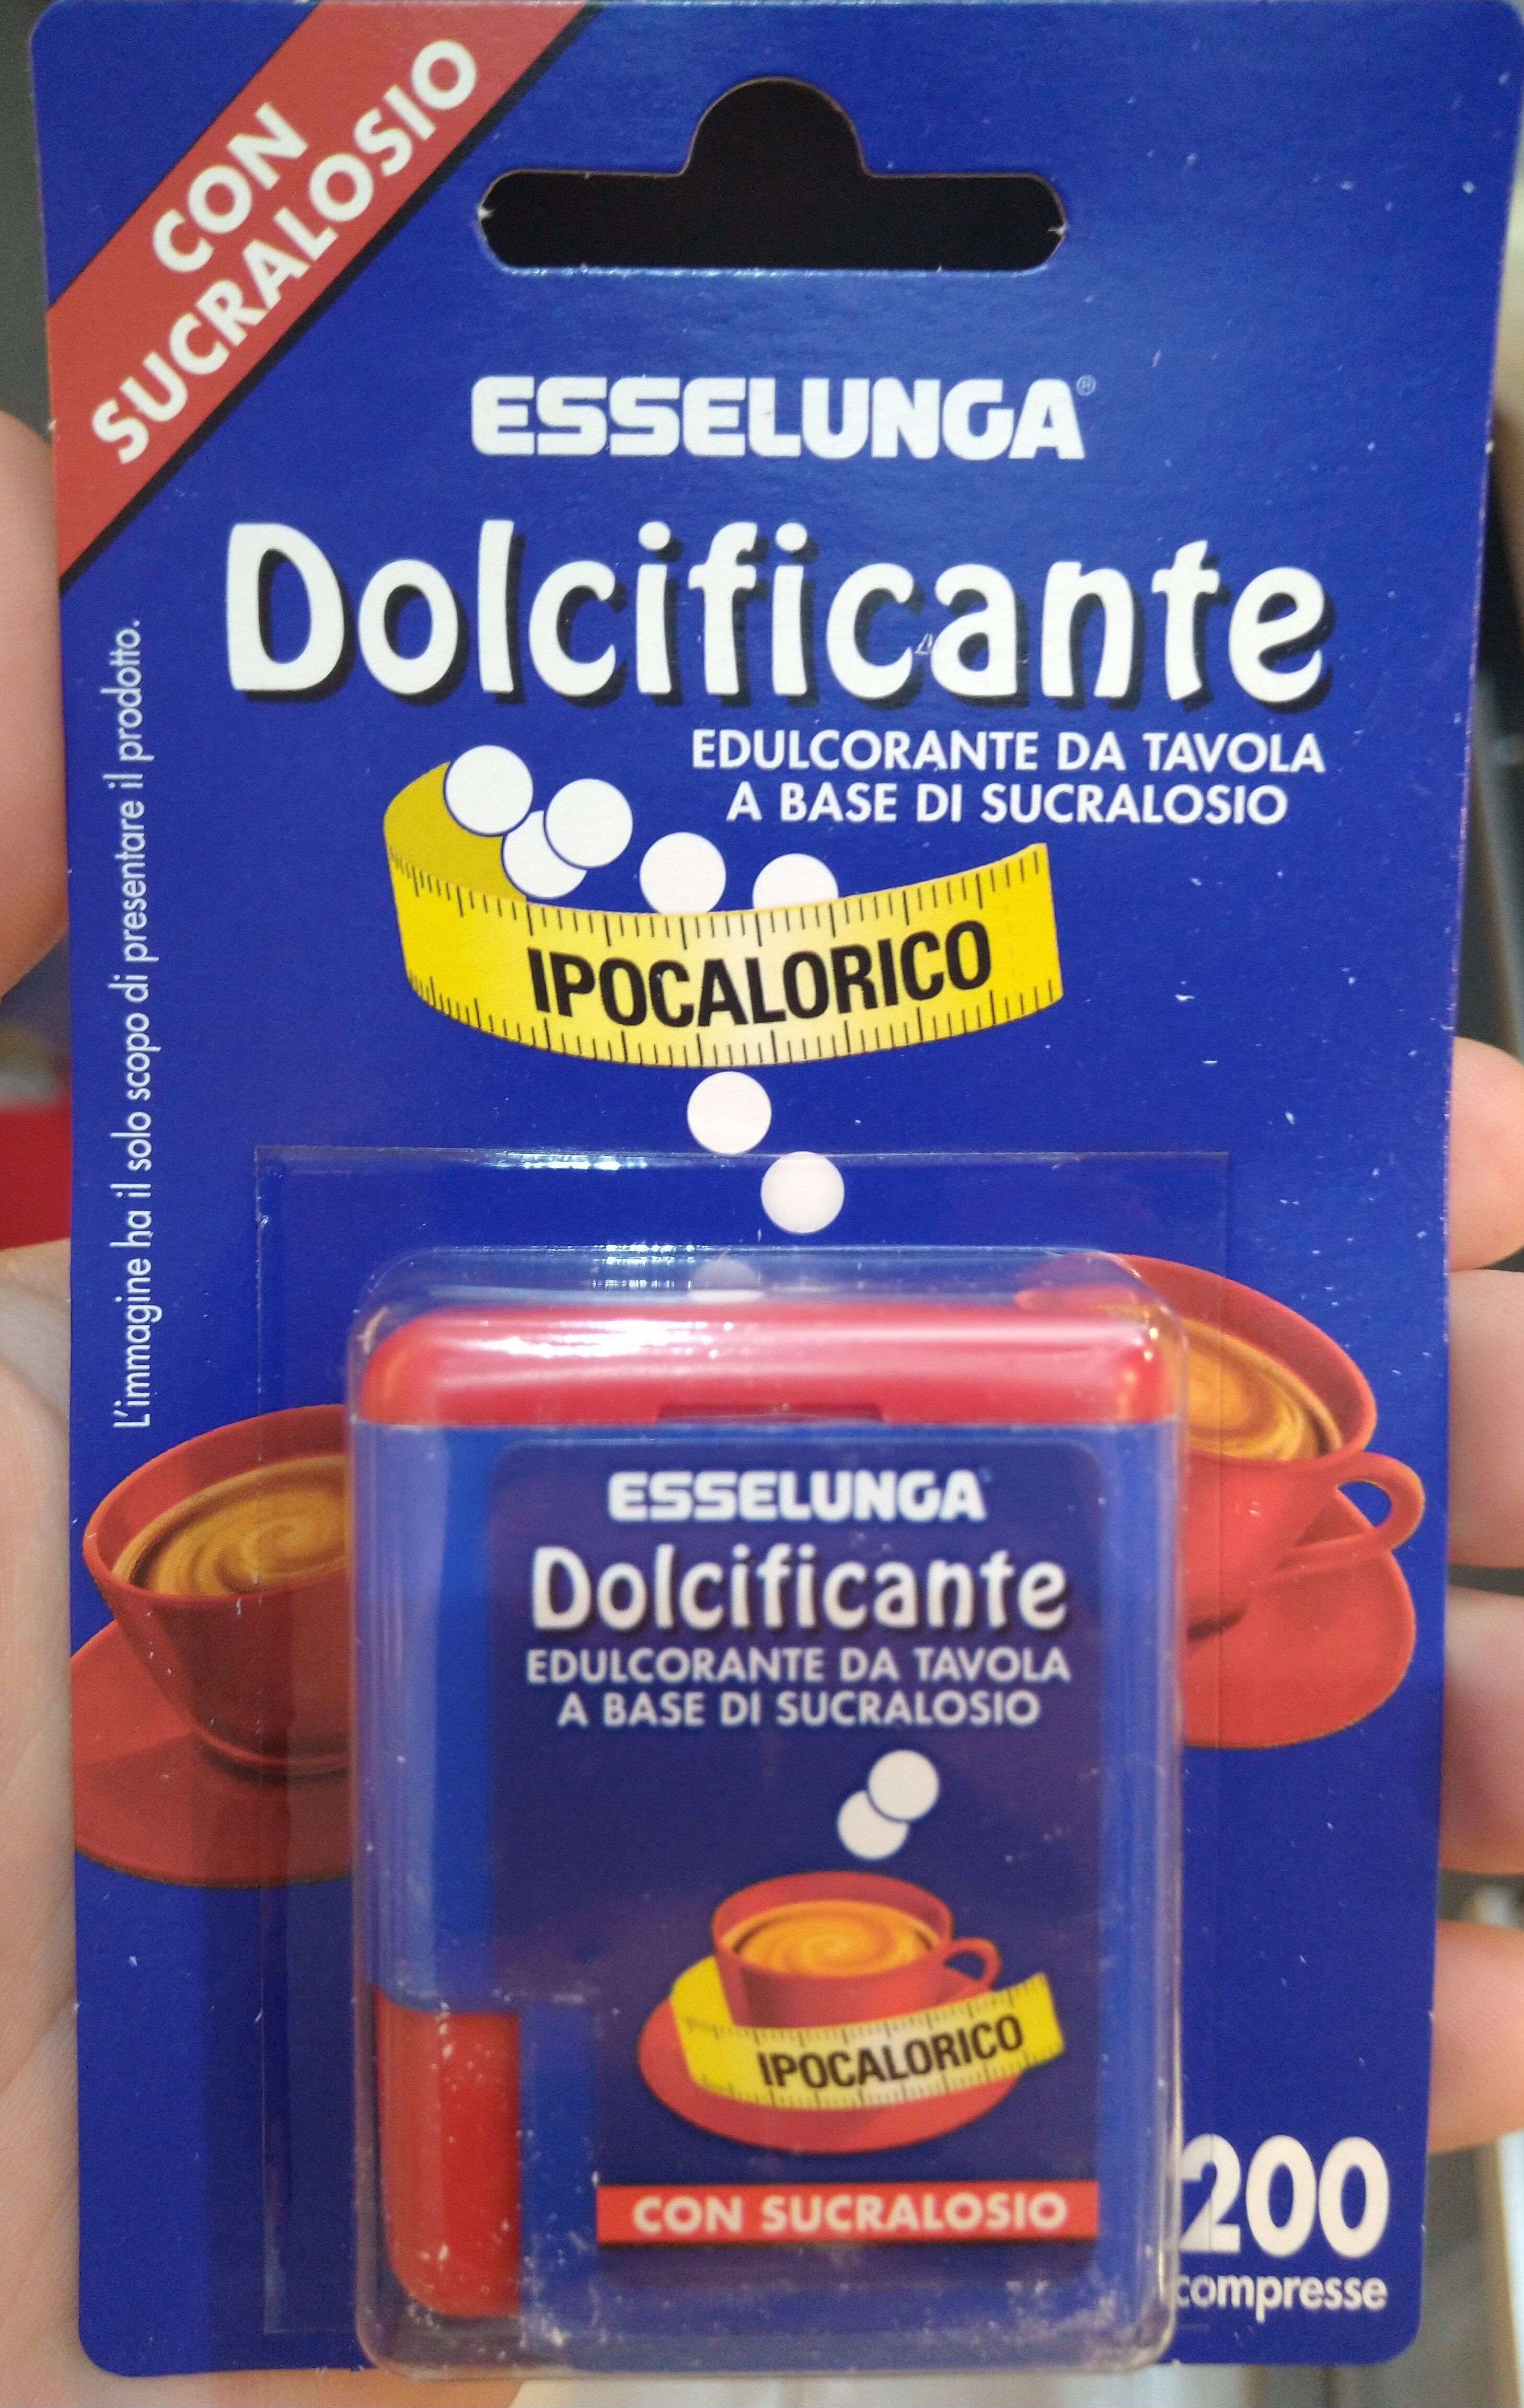 Dolcificante - نتاج - it